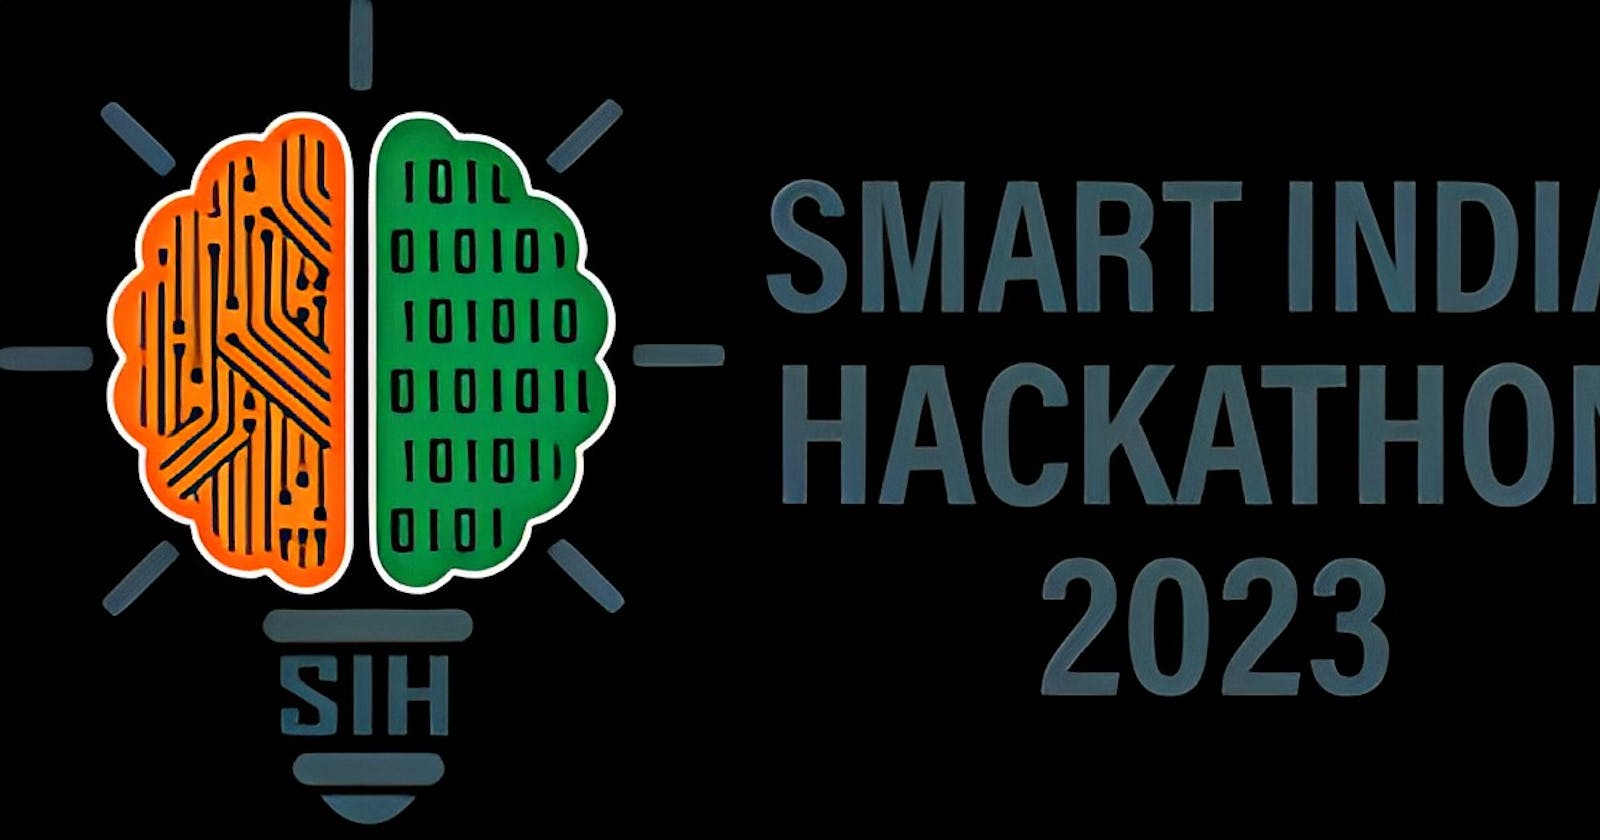 Smart India Hackathon 2023 journey